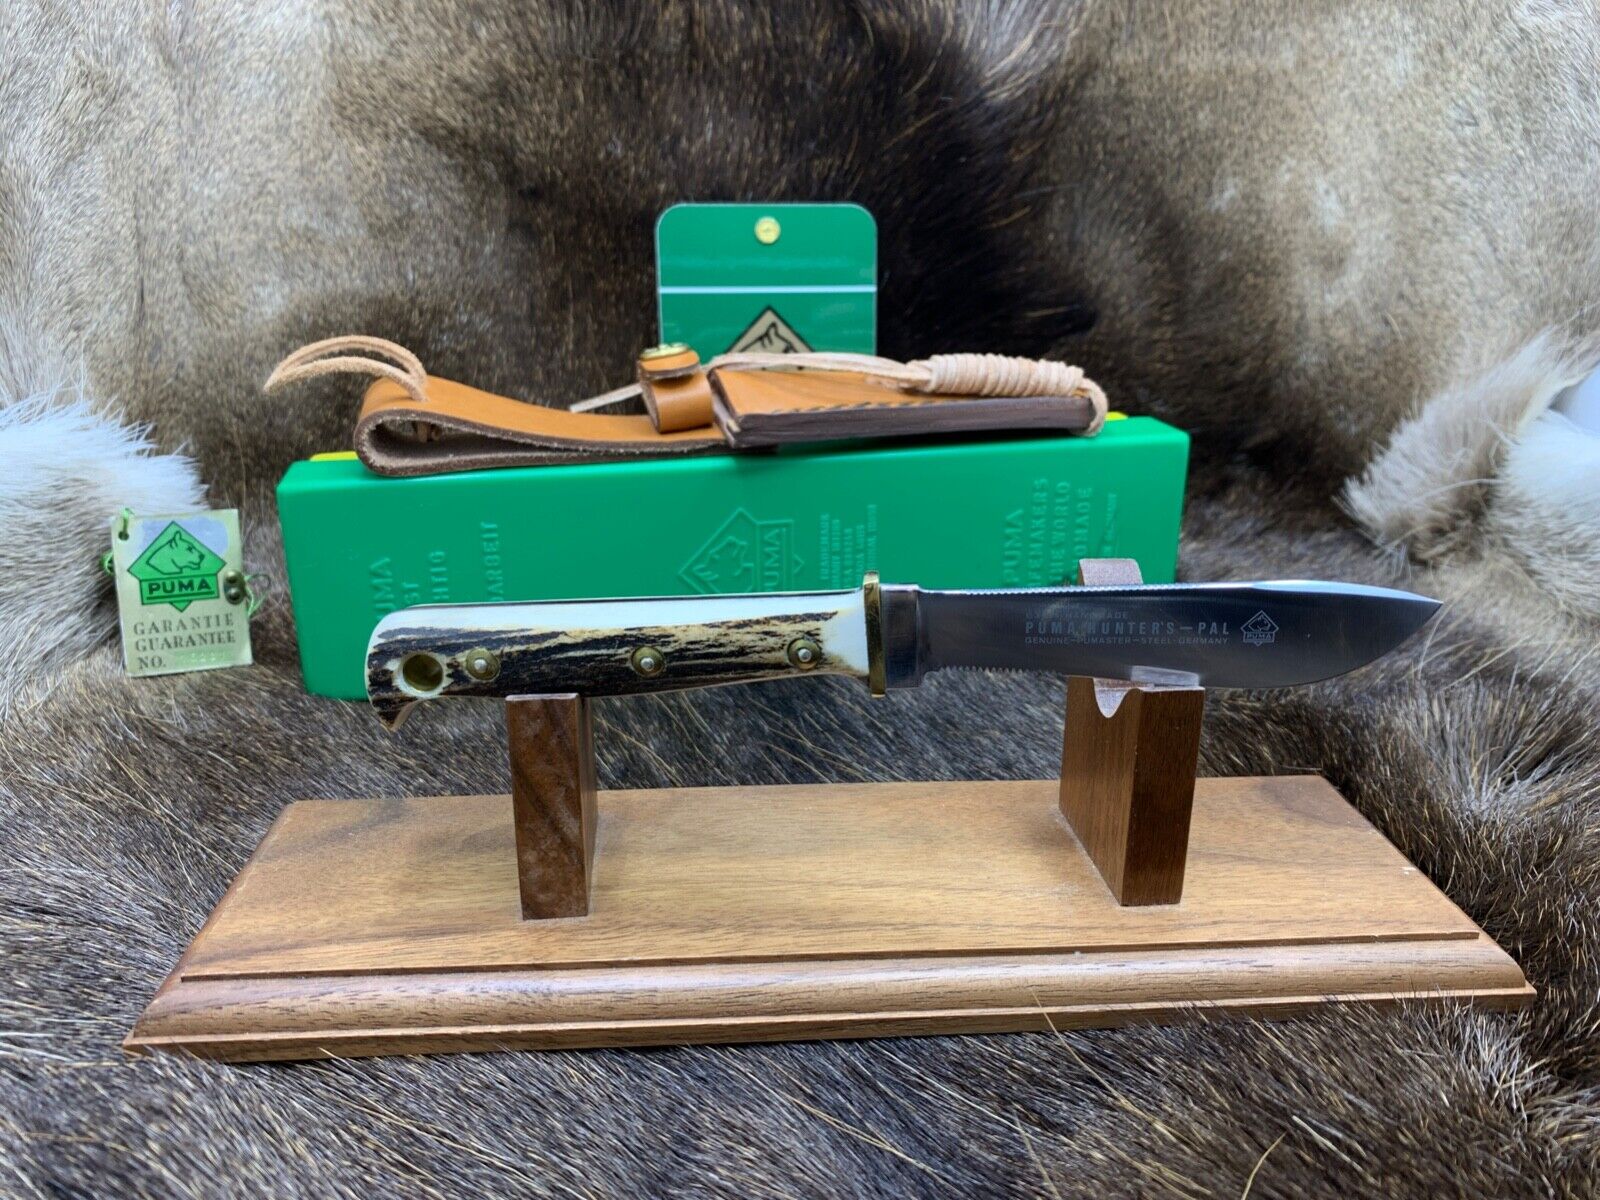 1982 Puma 6397 Hunter's Pal Knife Stag Handles & Leather Sheath G / Y Box - Mint